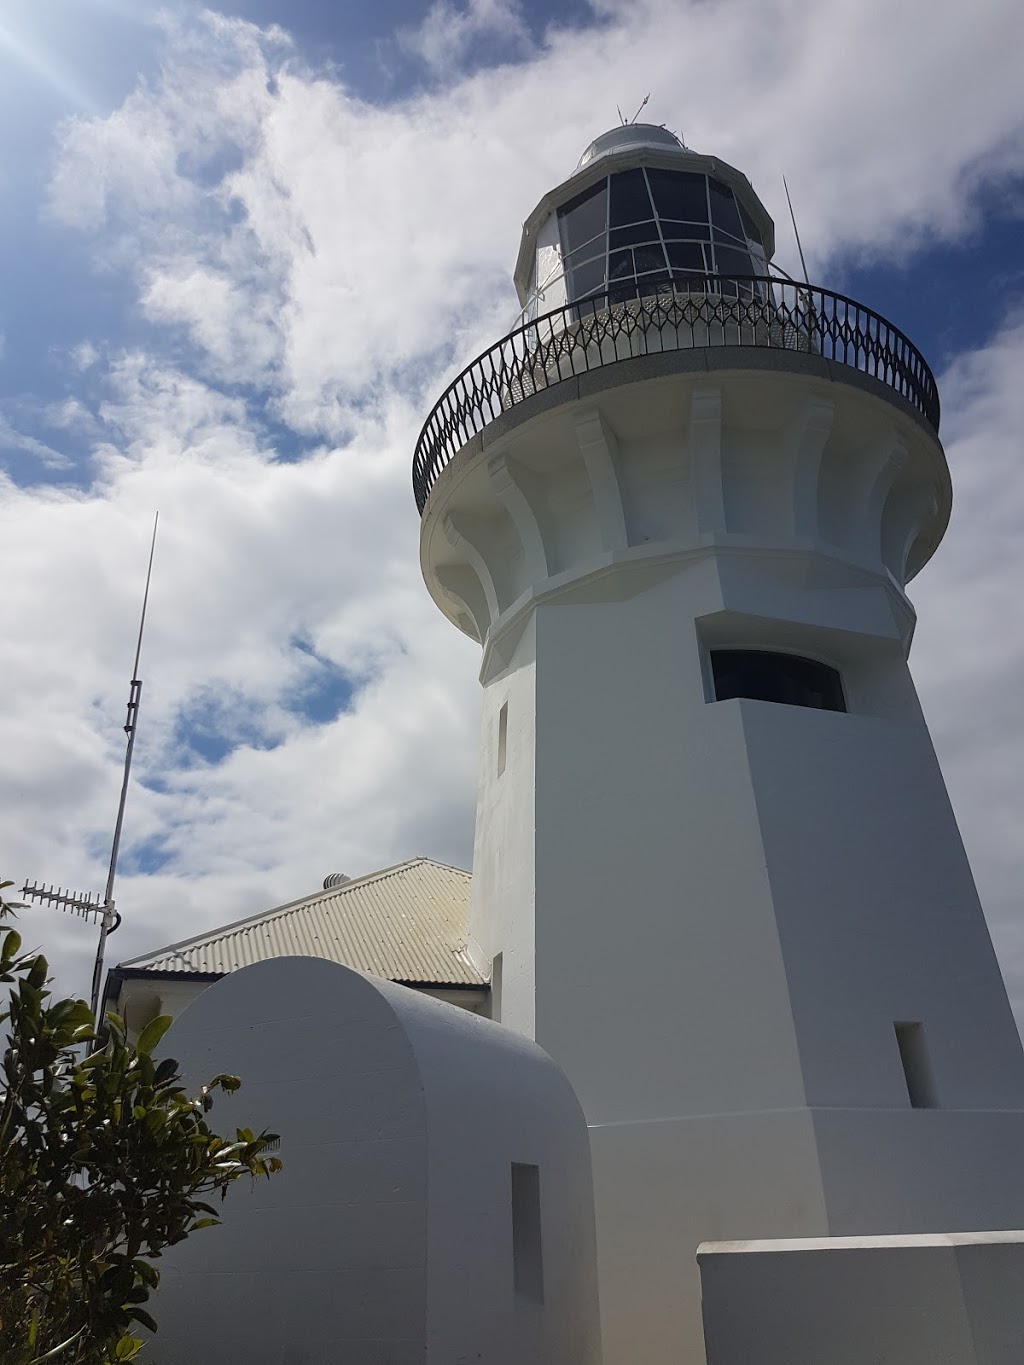 Smoky Cape Lighthouse Keepers Cottages | Lighthouse Rd, Arakoon NSW 2431, Australia | Phone: (02) 6566 6168